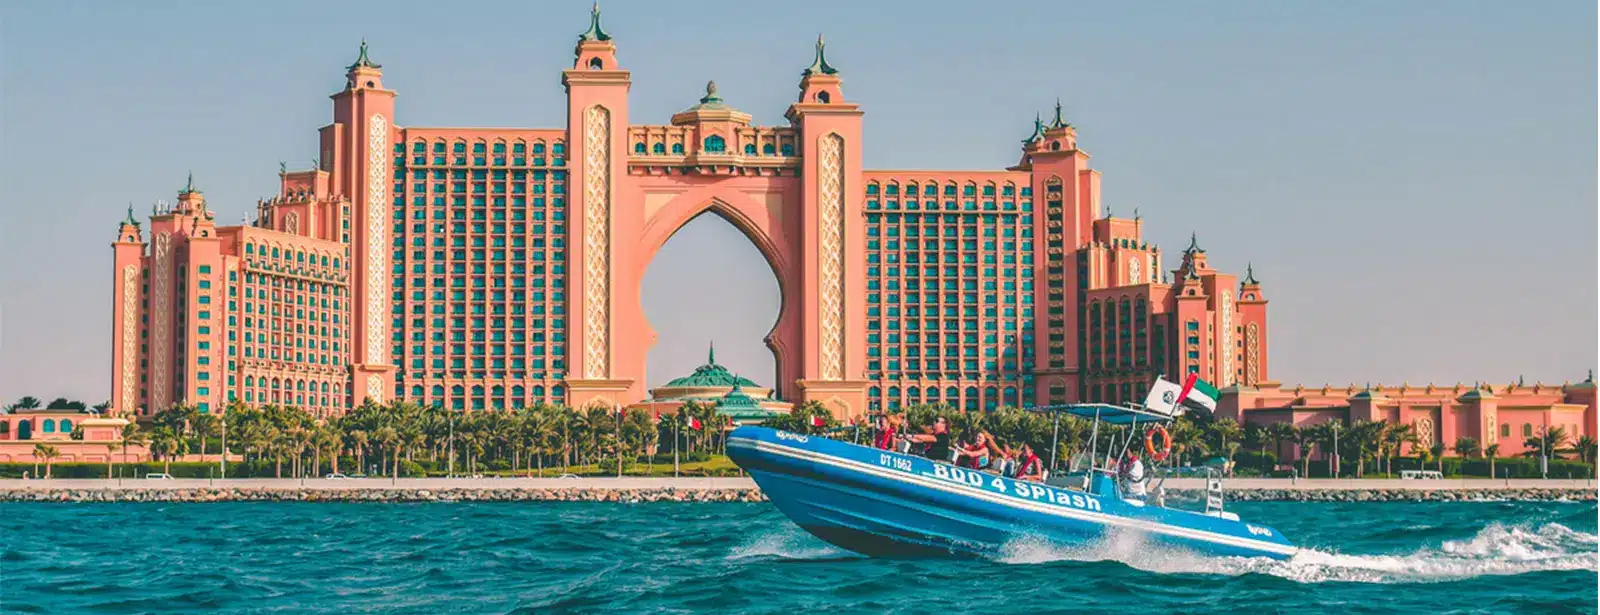 Splash Tours at Marina Dubai offers